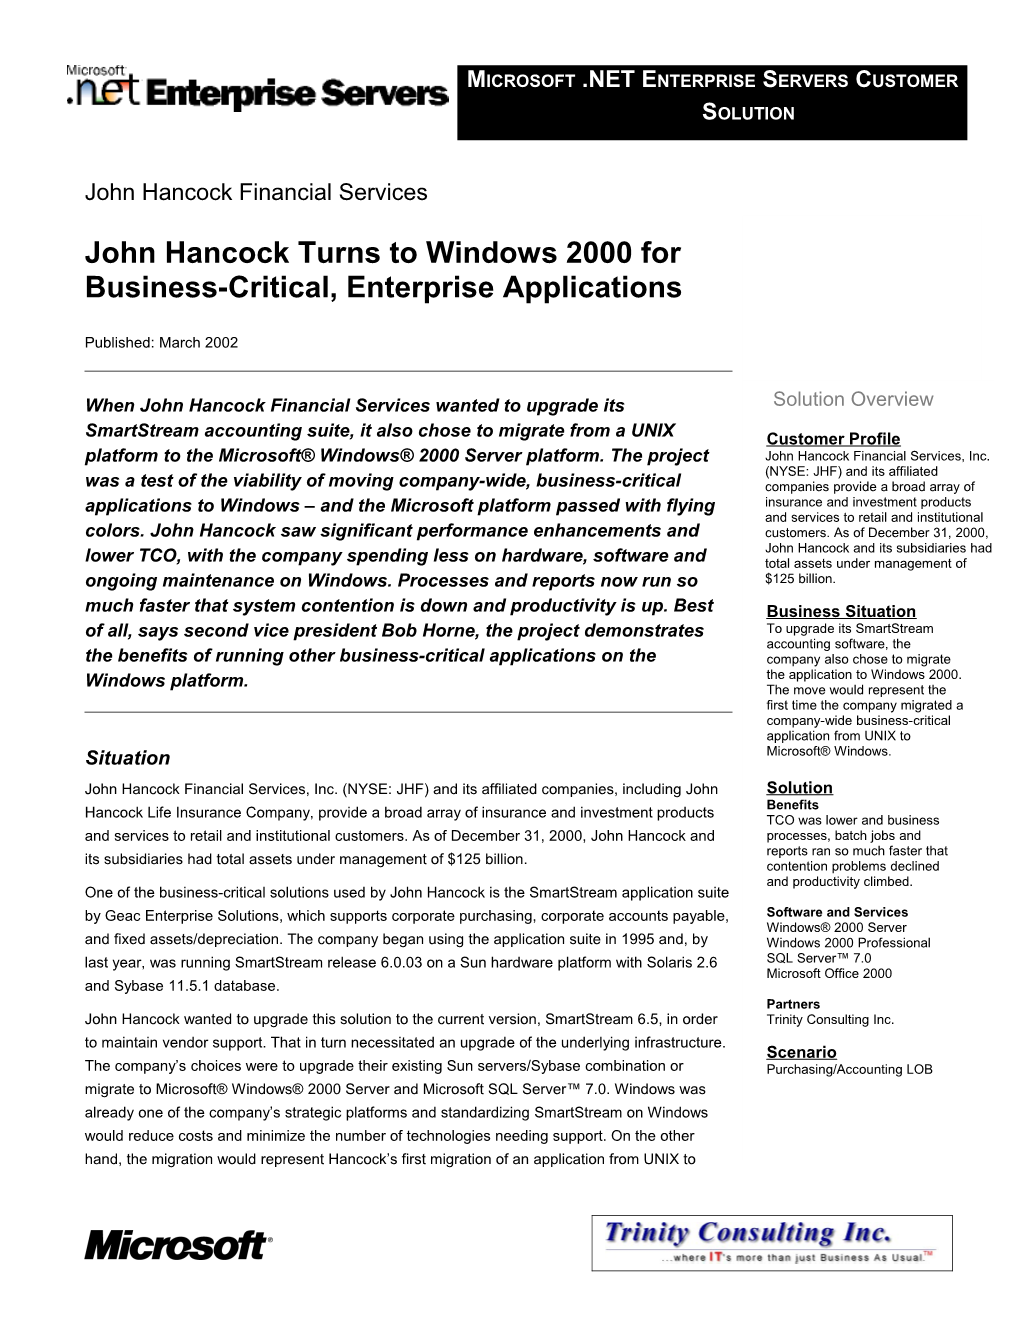 John Hancock Turns to Windows 2000 for Business-Critical, Enterprise Applications